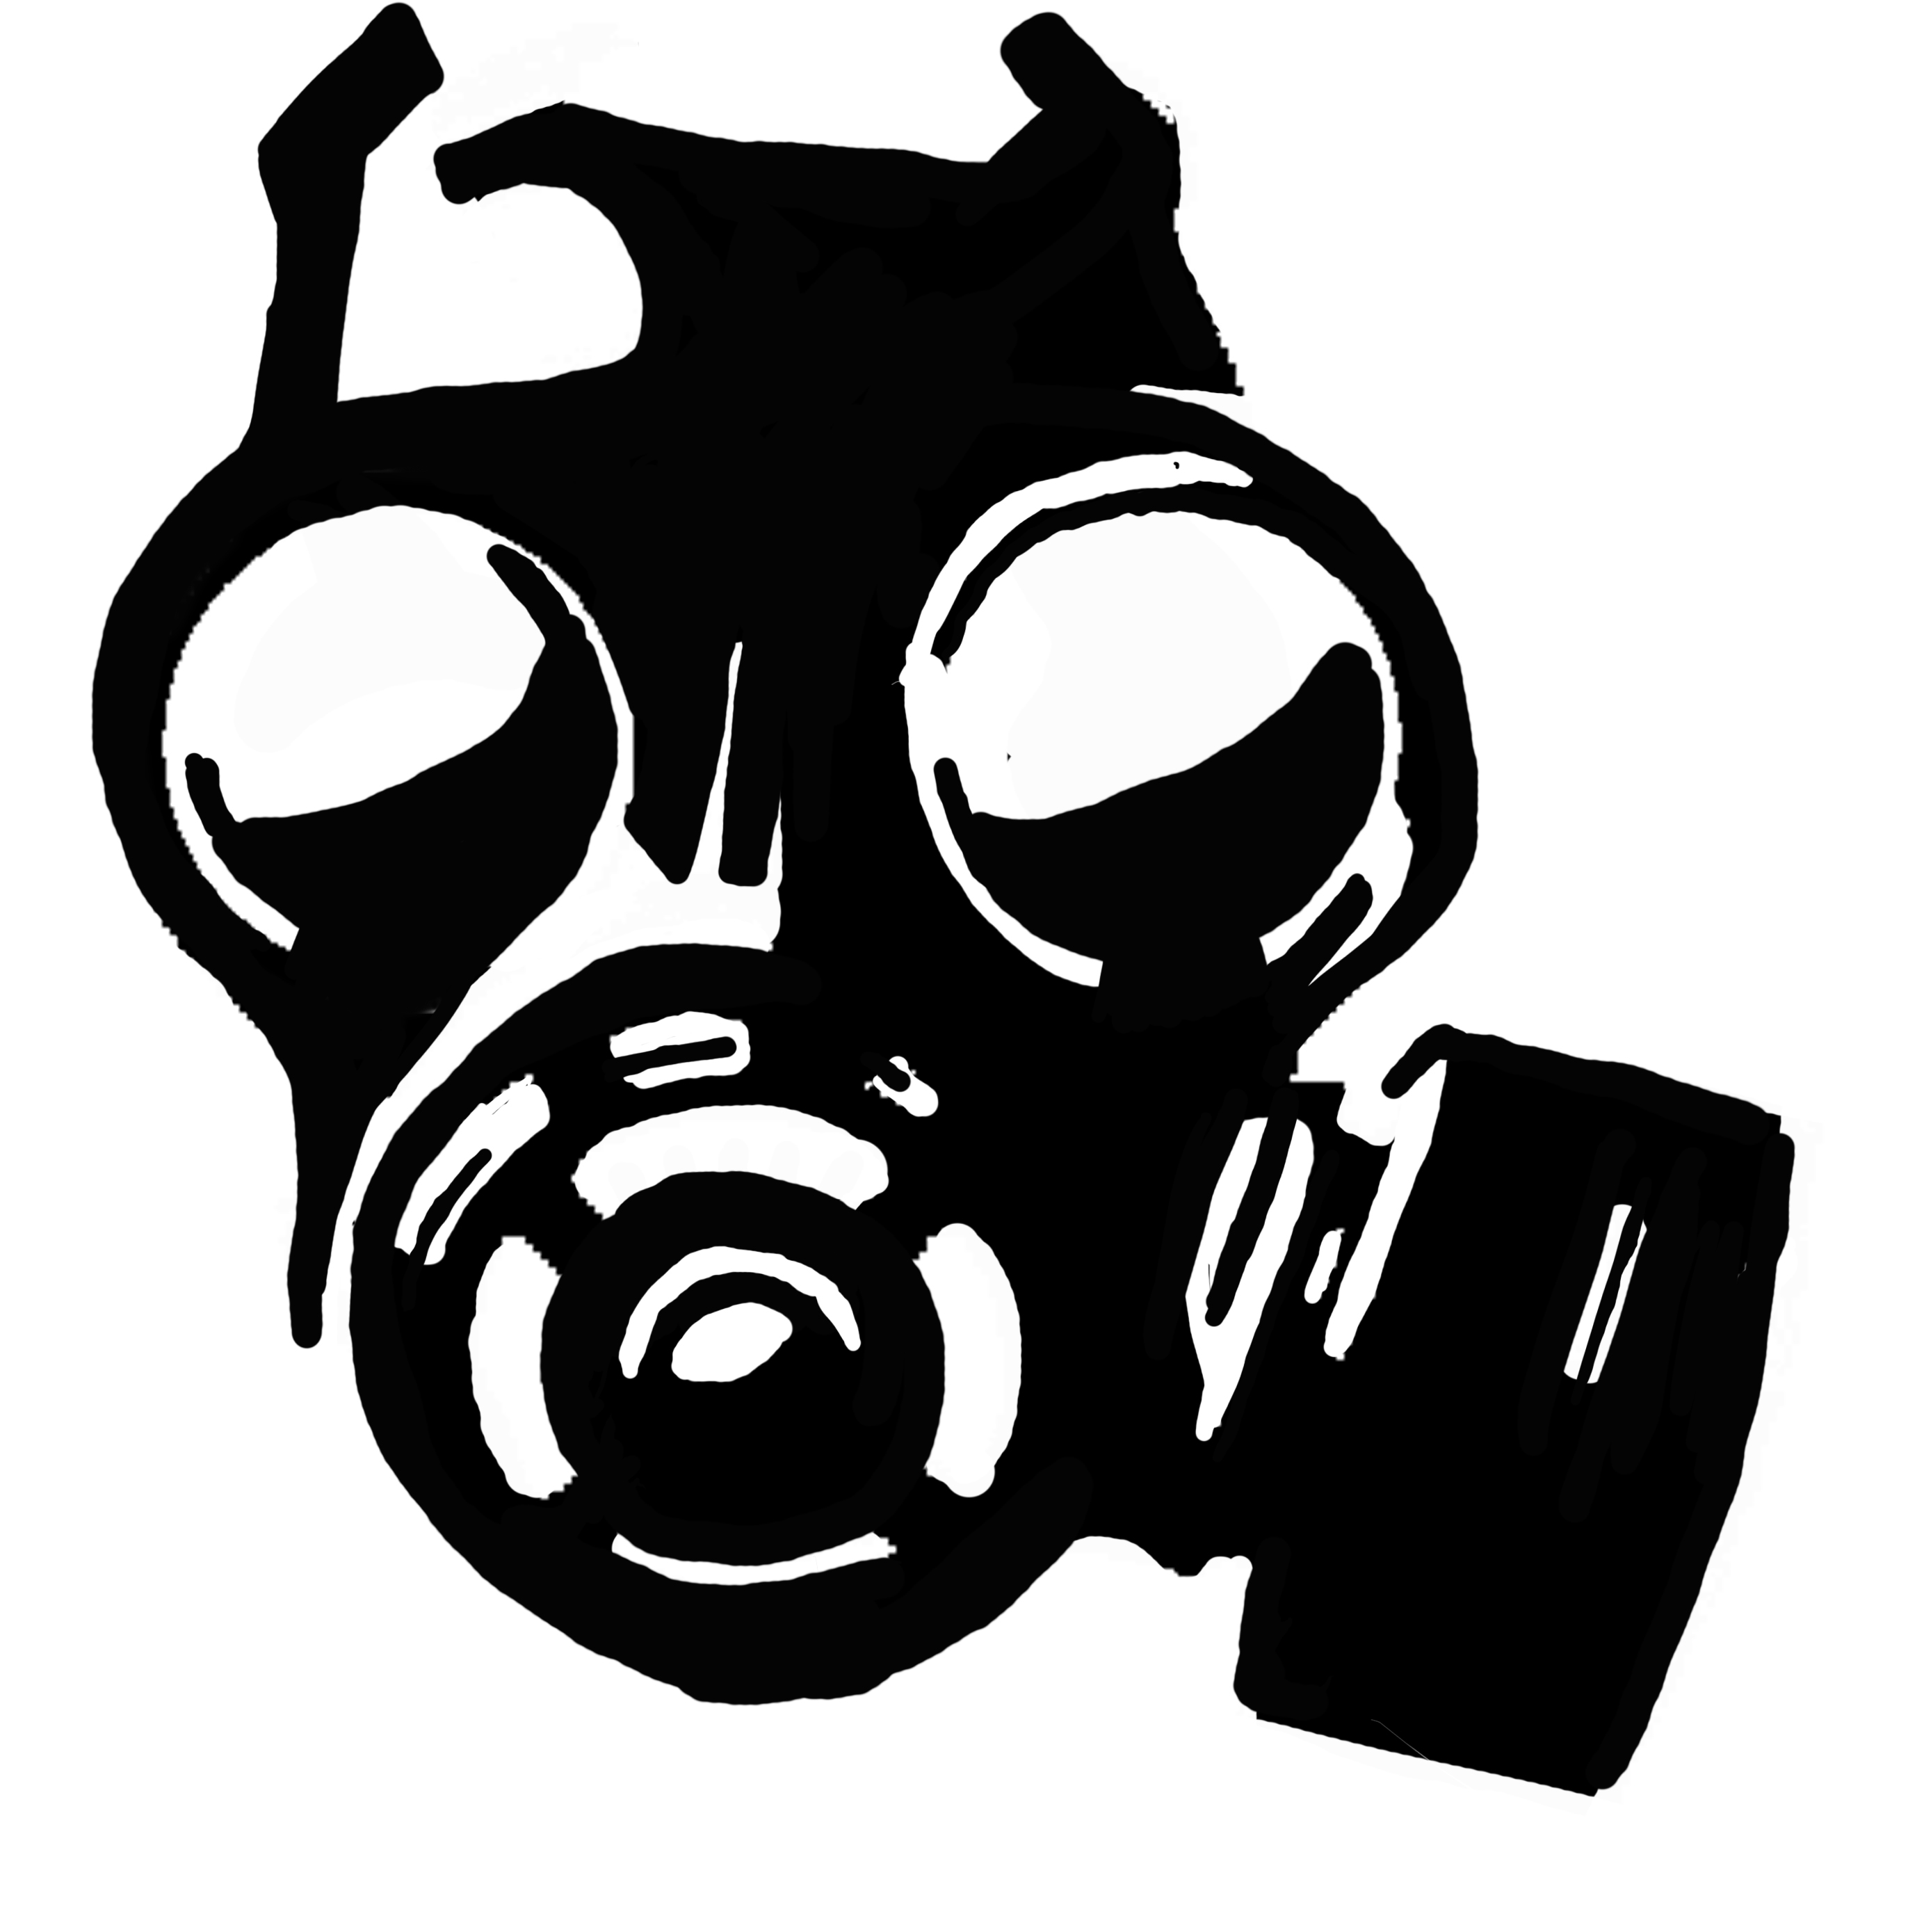 Gas masks. Gas masks. Preview